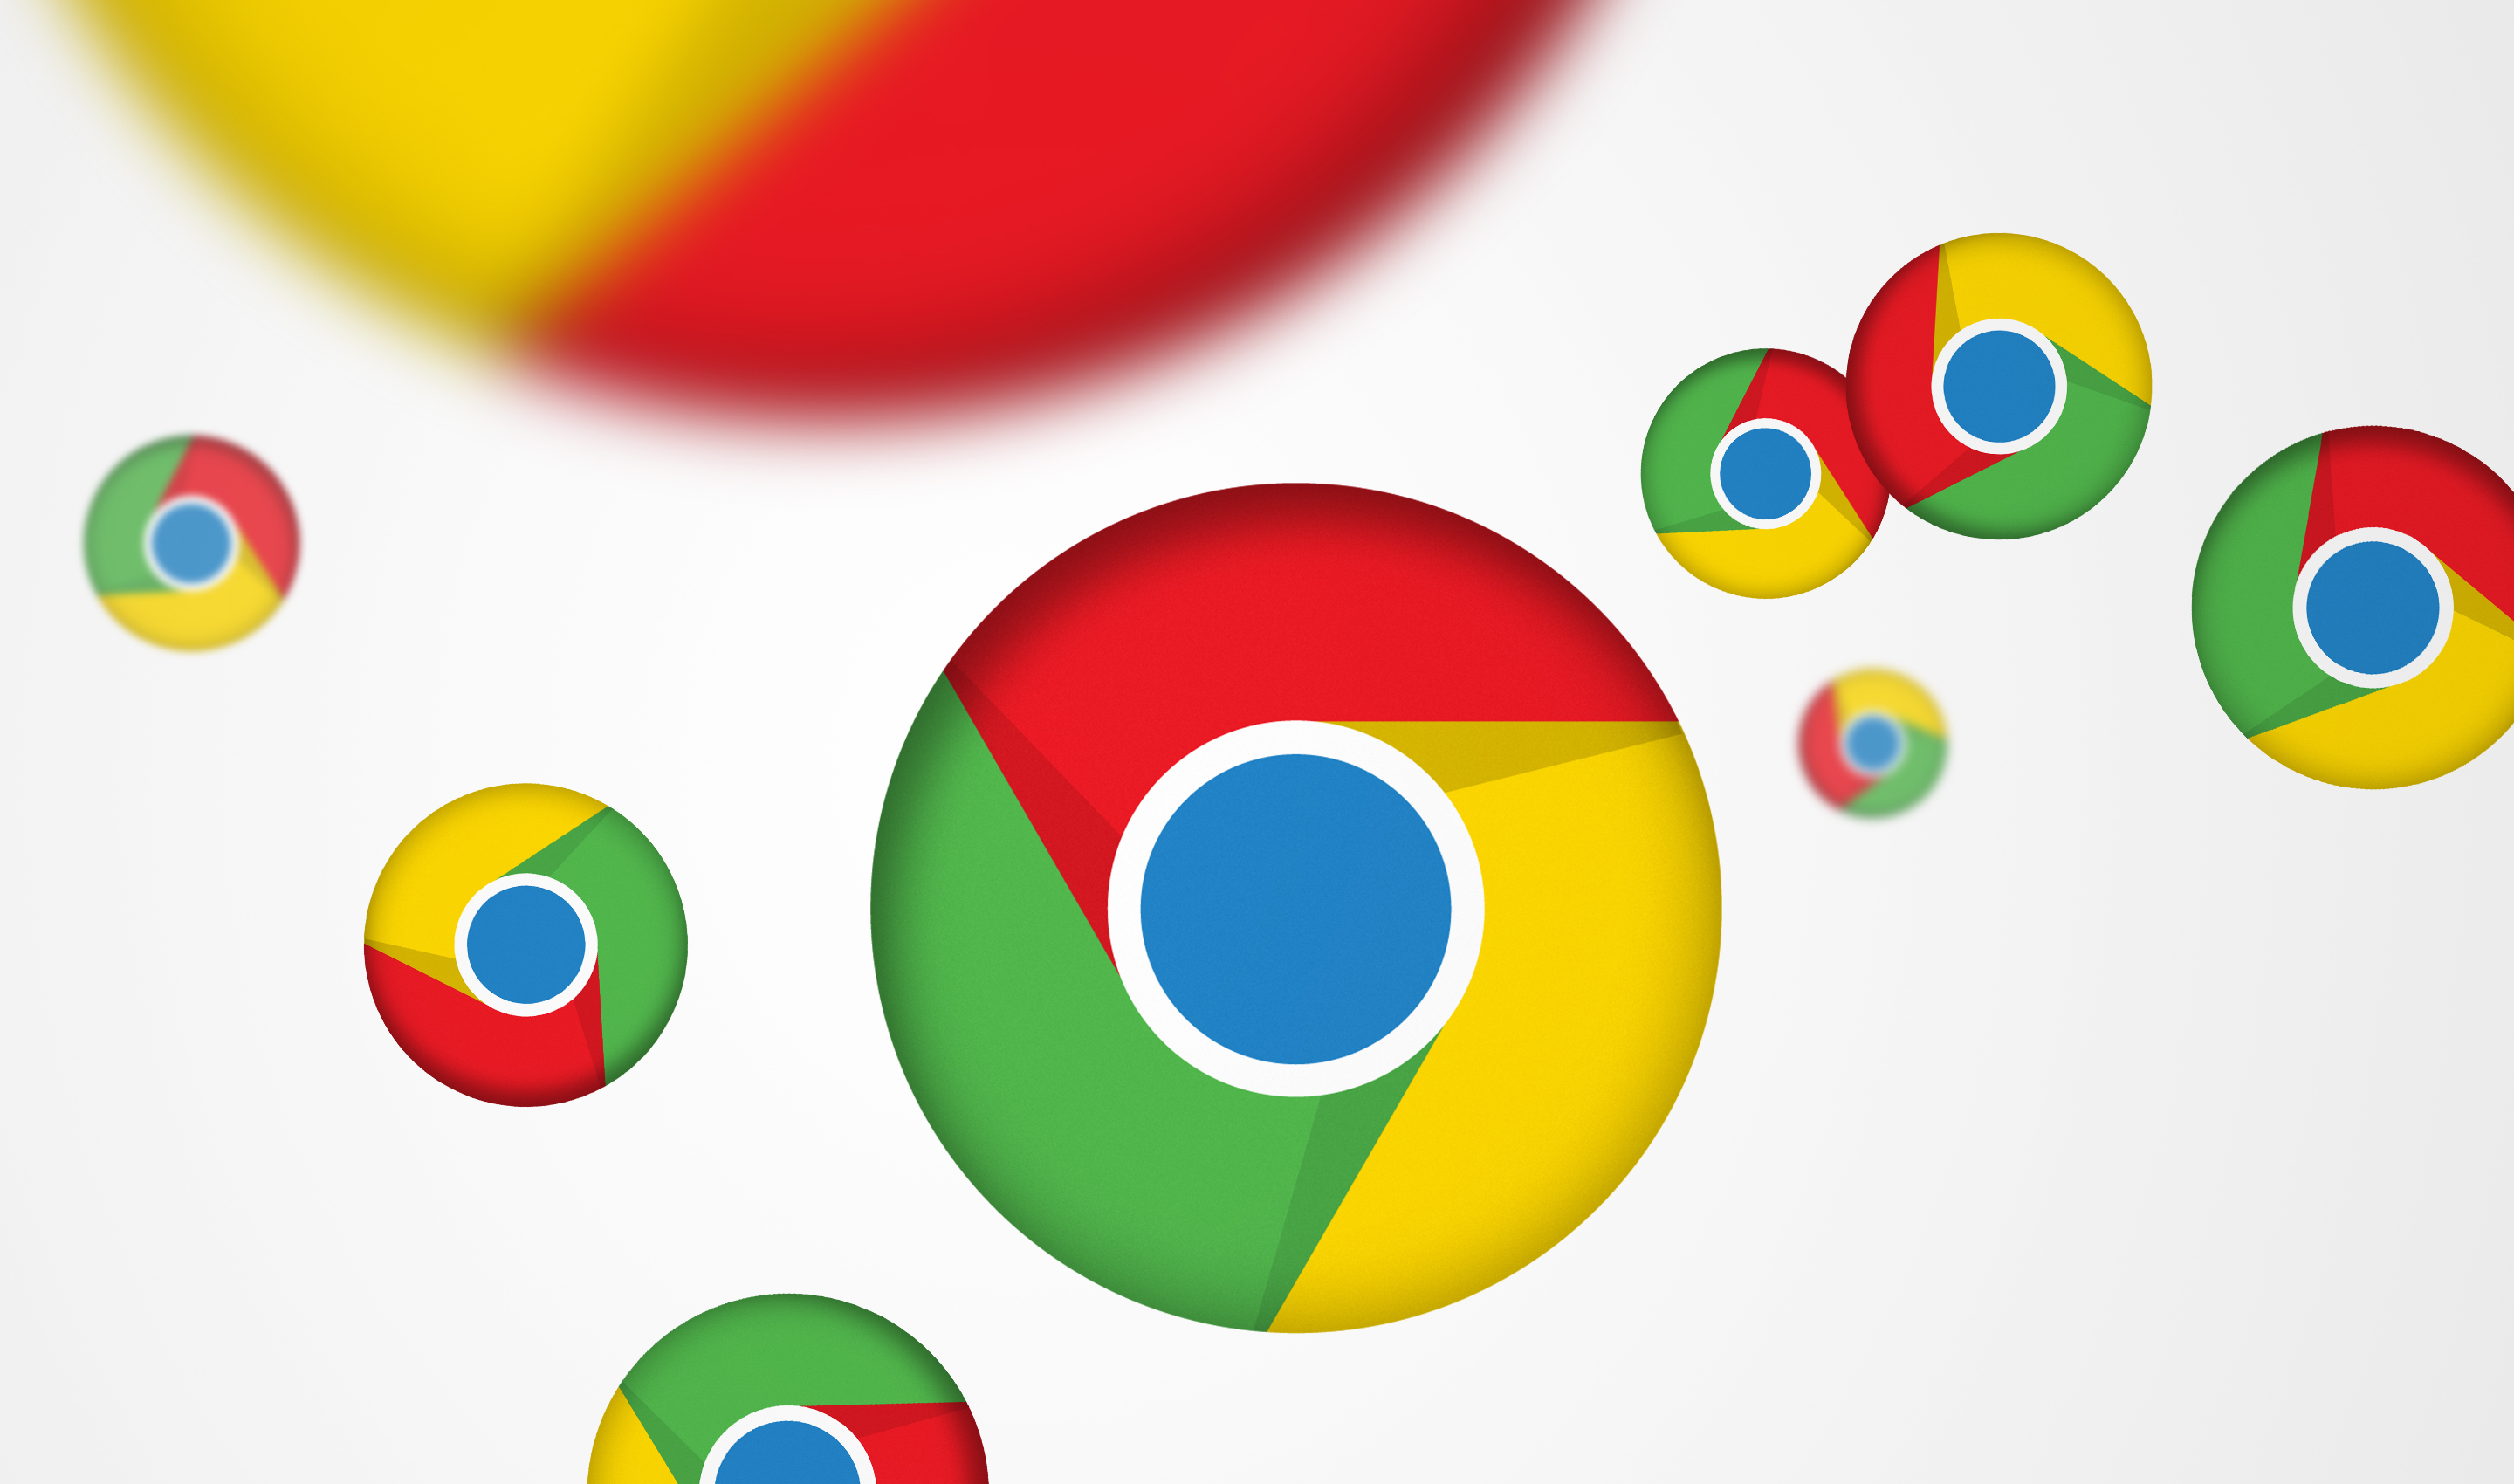 New logo for Google Chrome designed by Office